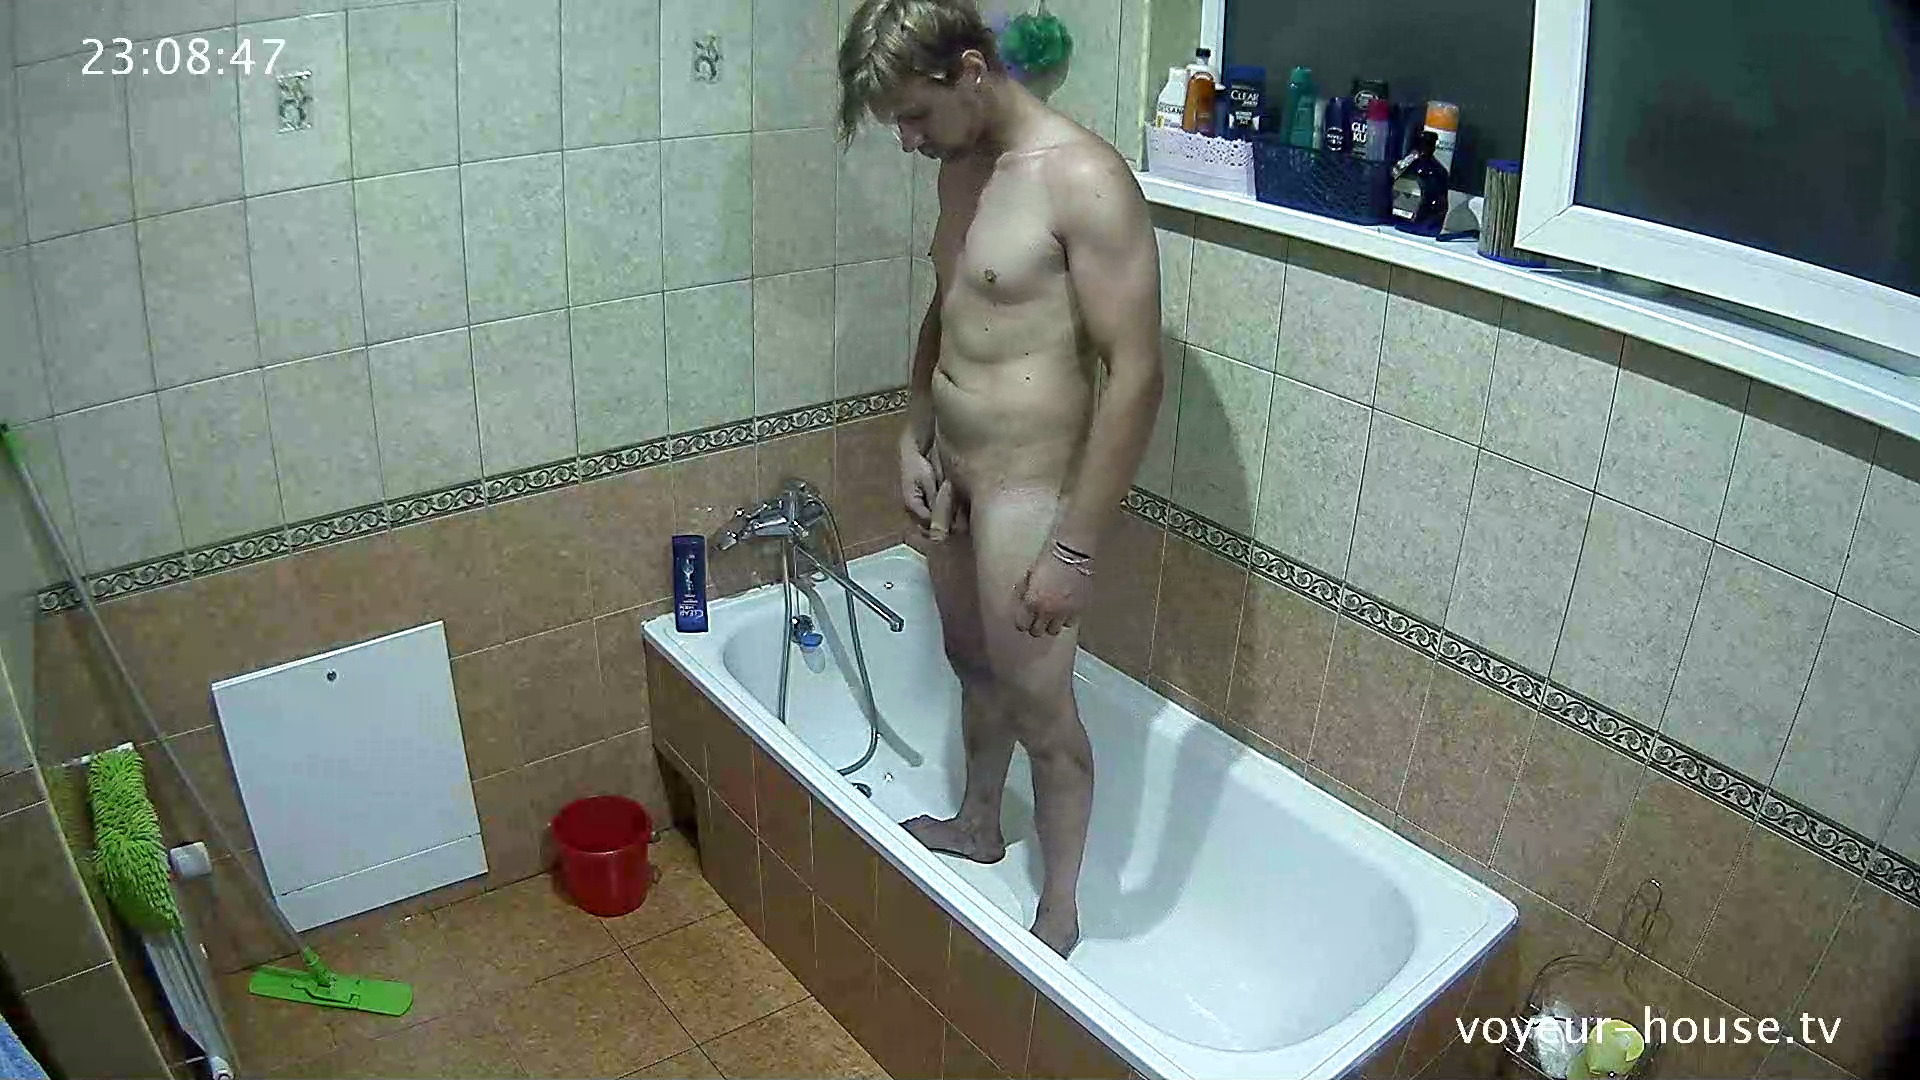 Oleg in the shower 18th Aug 2017